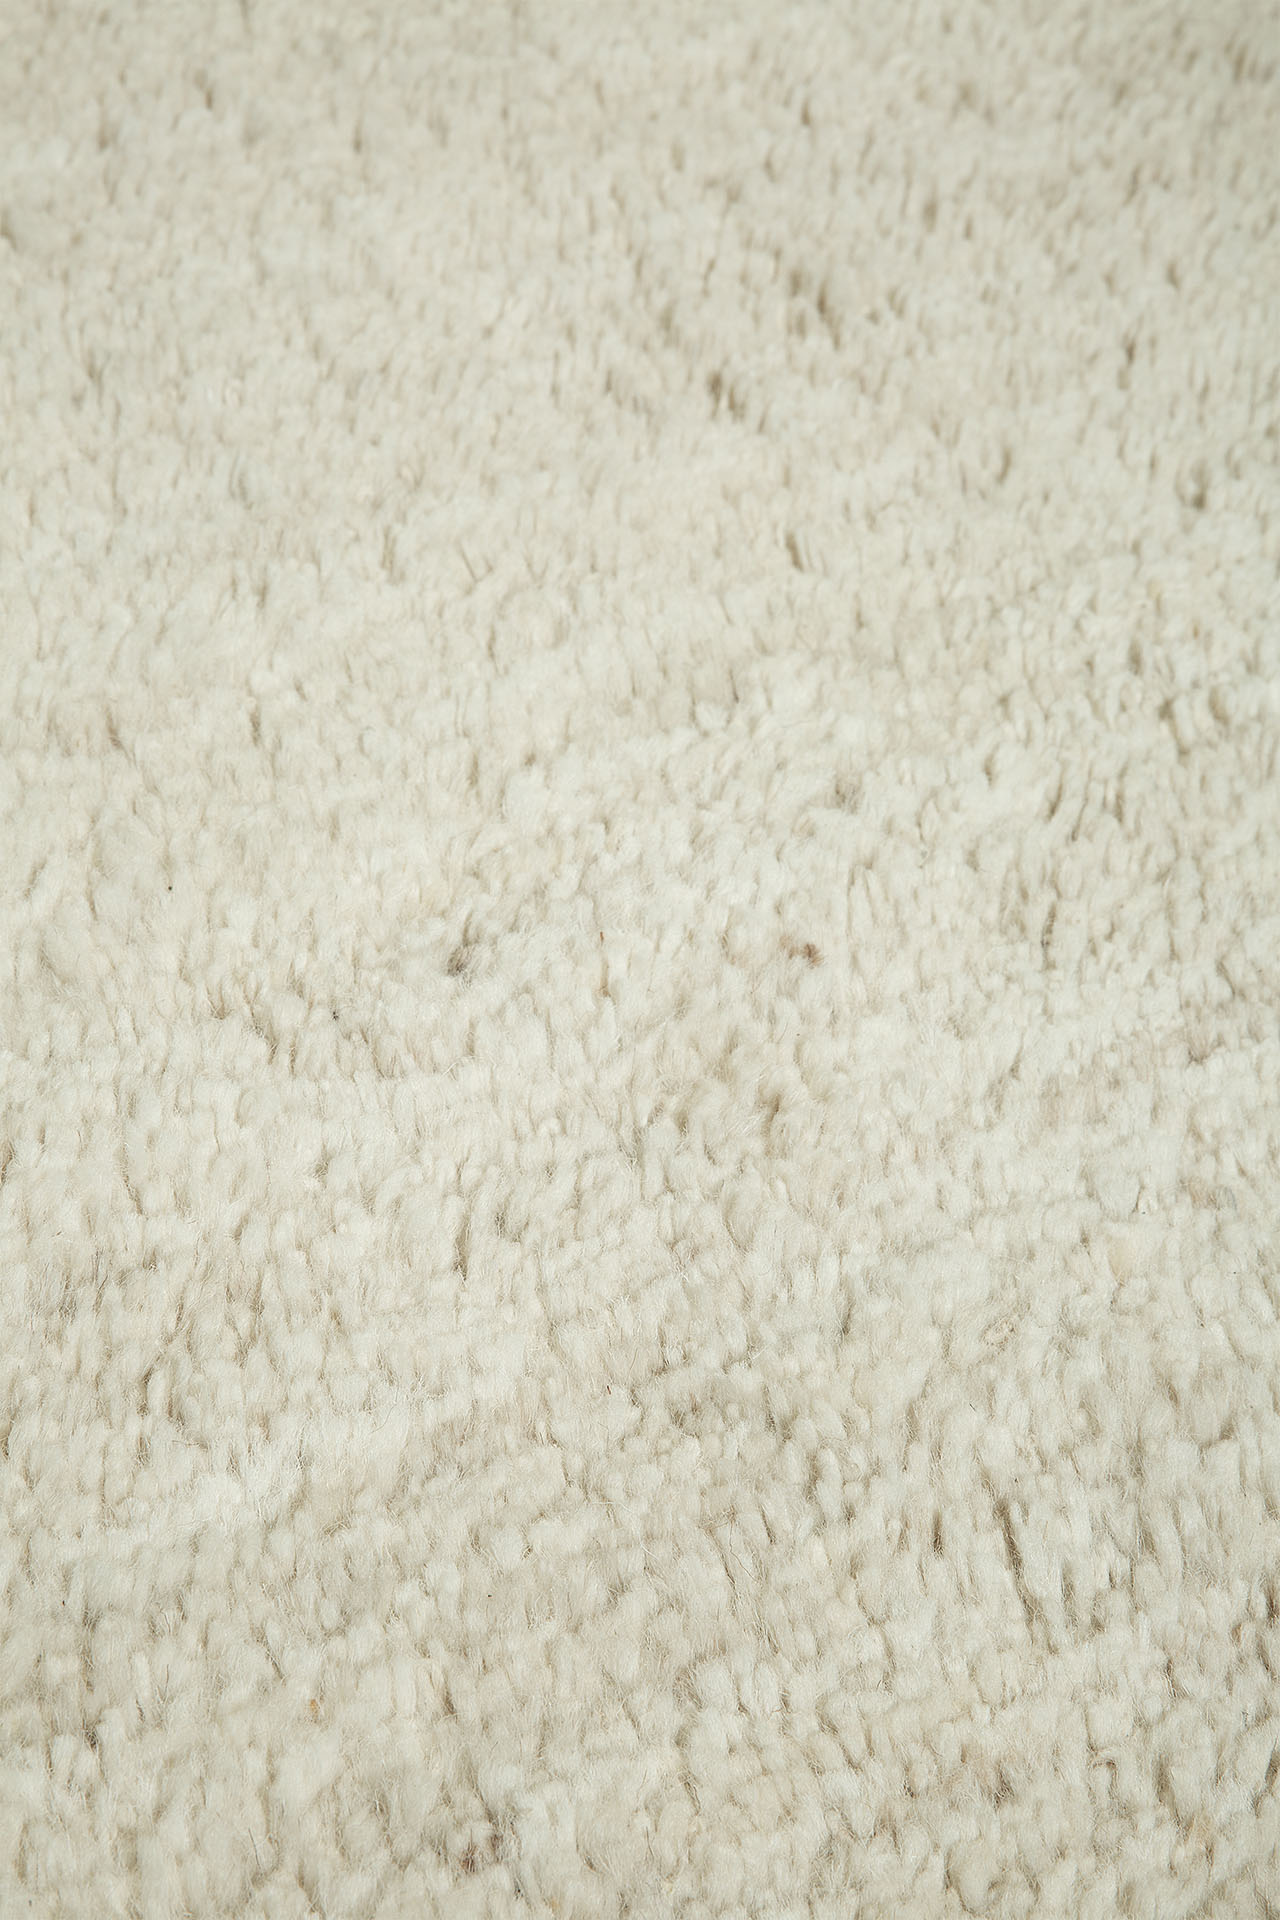 Ethnicraft - Dunes Sand tapijt (170 x 240 x 1 cm)